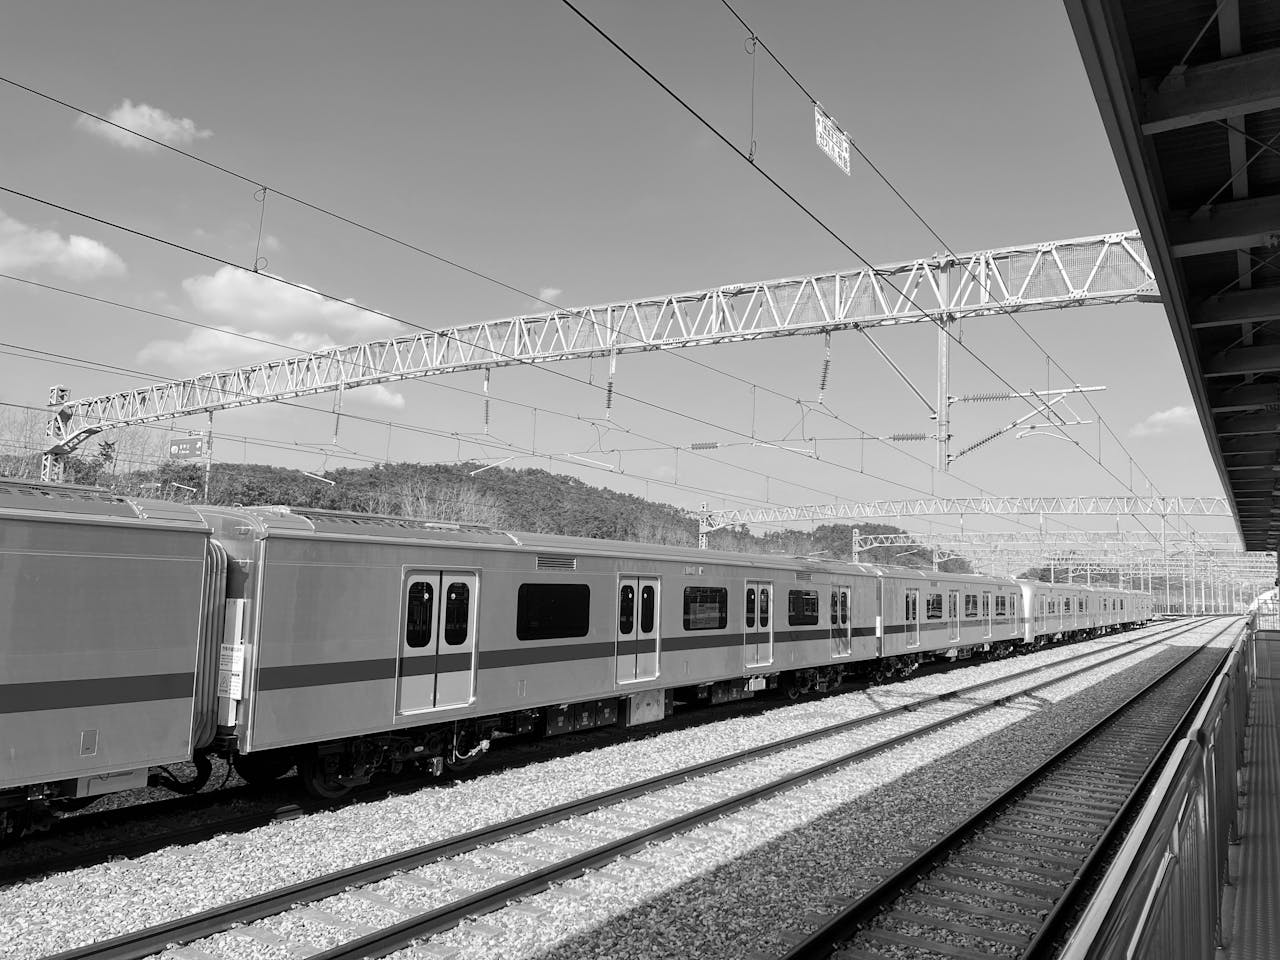 Busan Station train tracks in South Korea